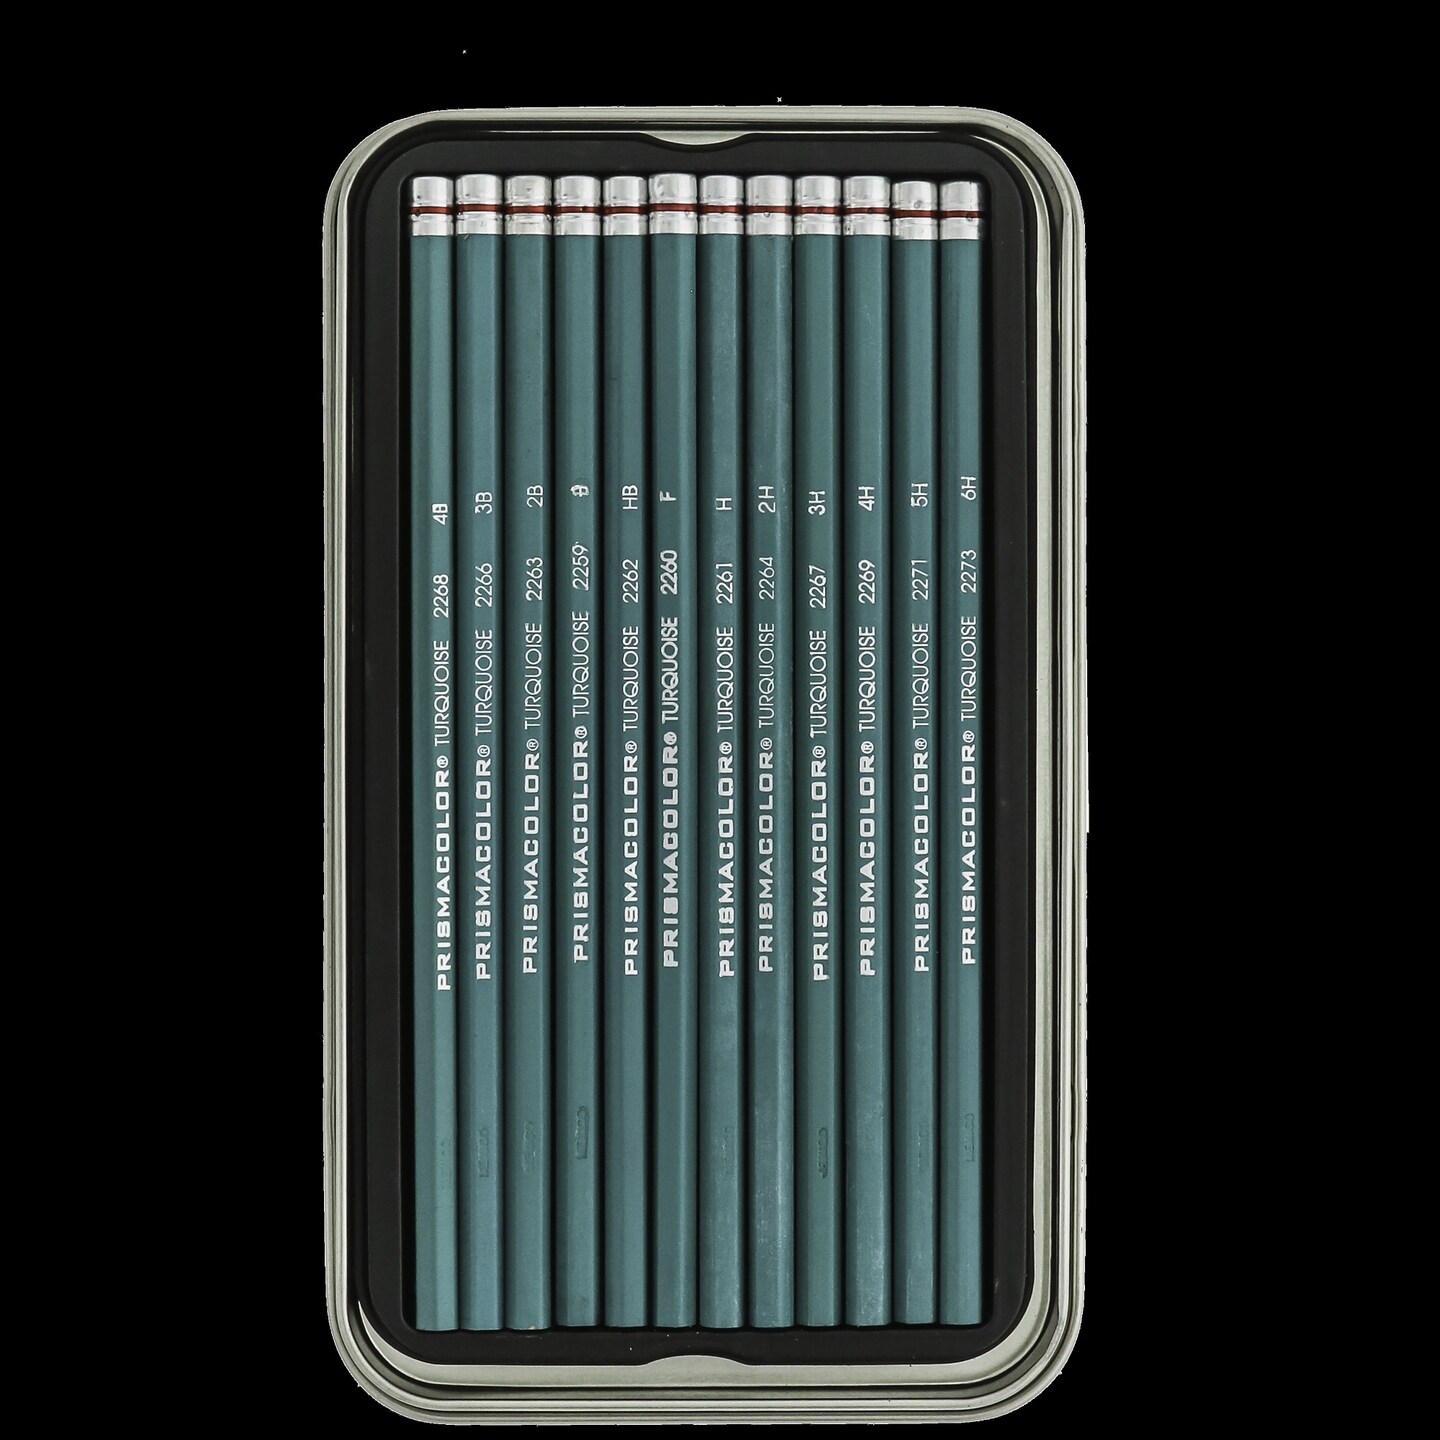 Prismacolor Premier Turquoise Graphite Sketching Pencils, Medium Leads, 12  Pack